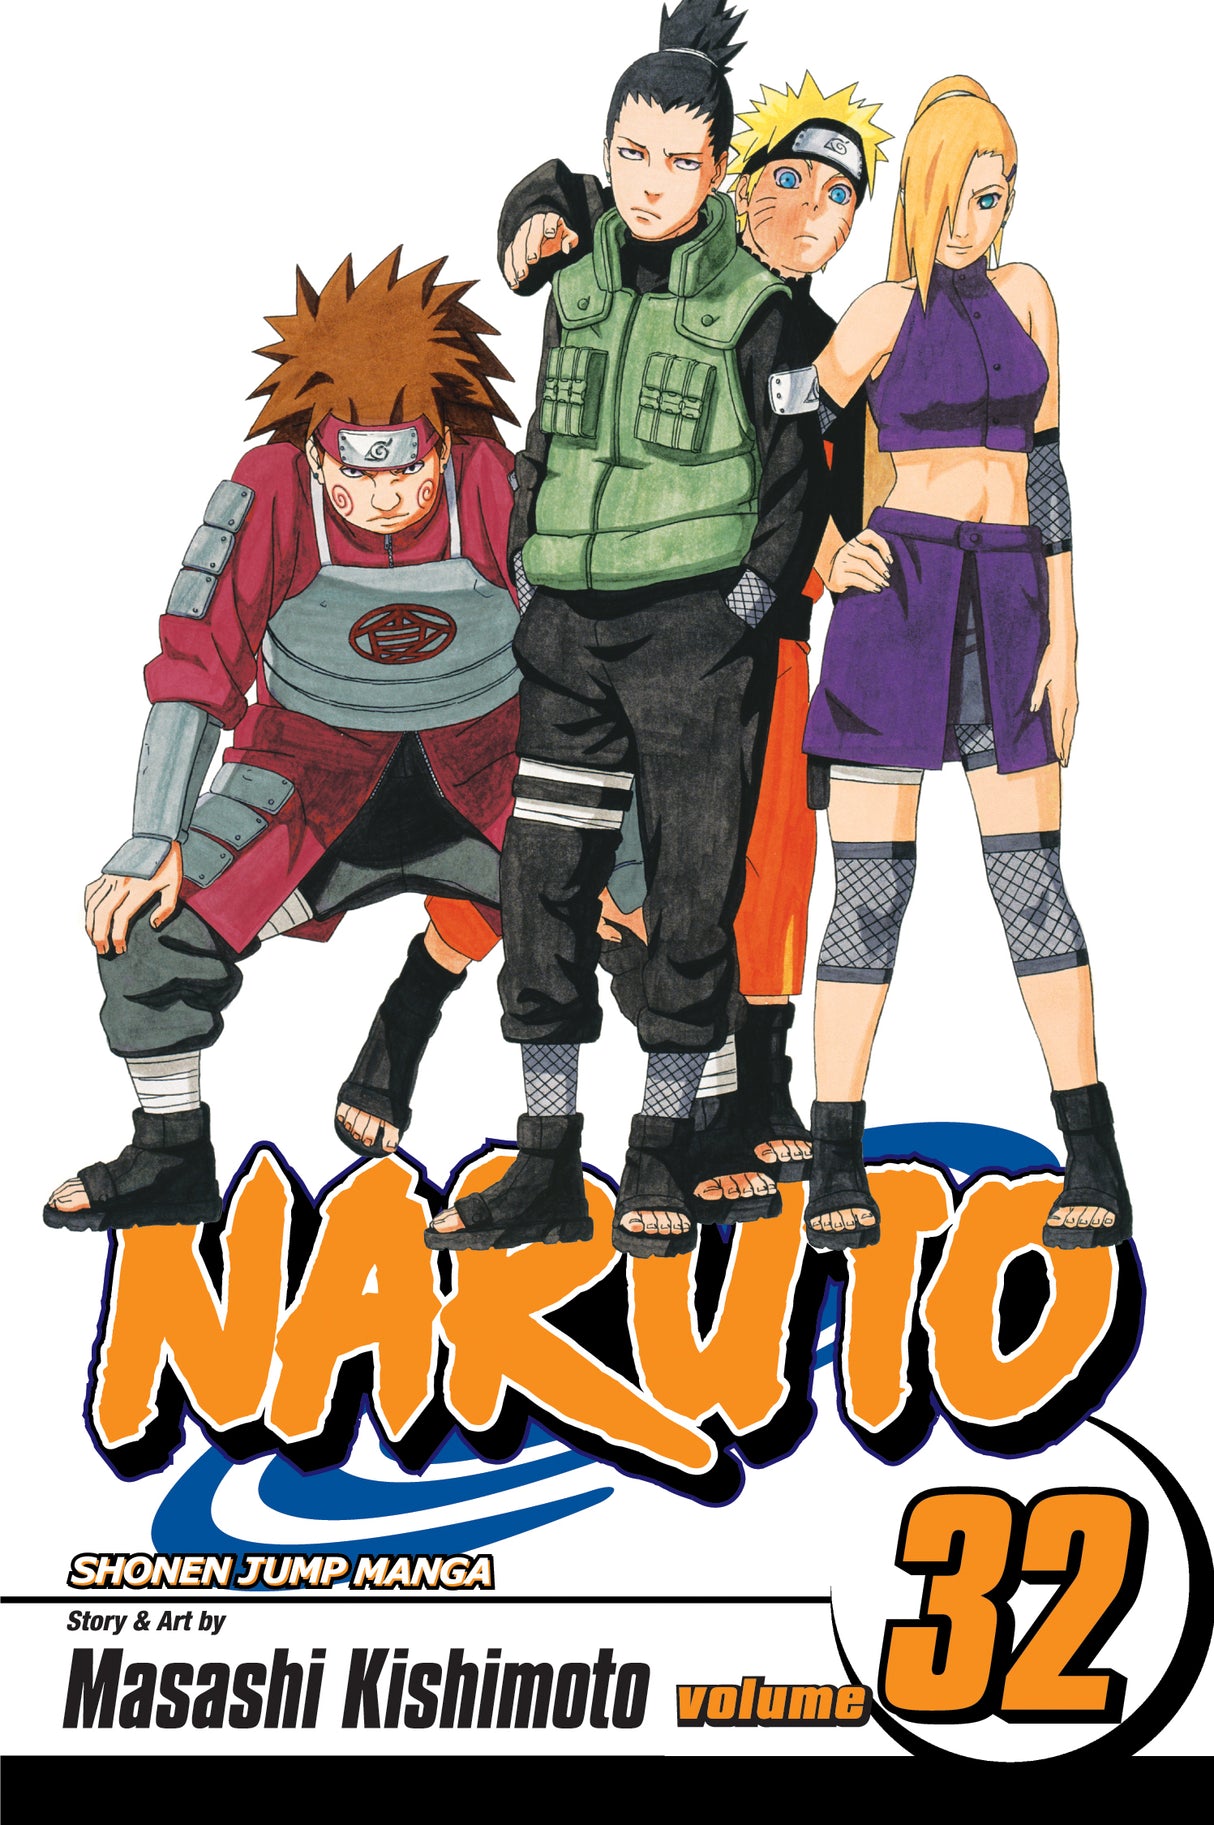 Cover image of the Manga Naruto, Vol.32: The Search for Sasuke